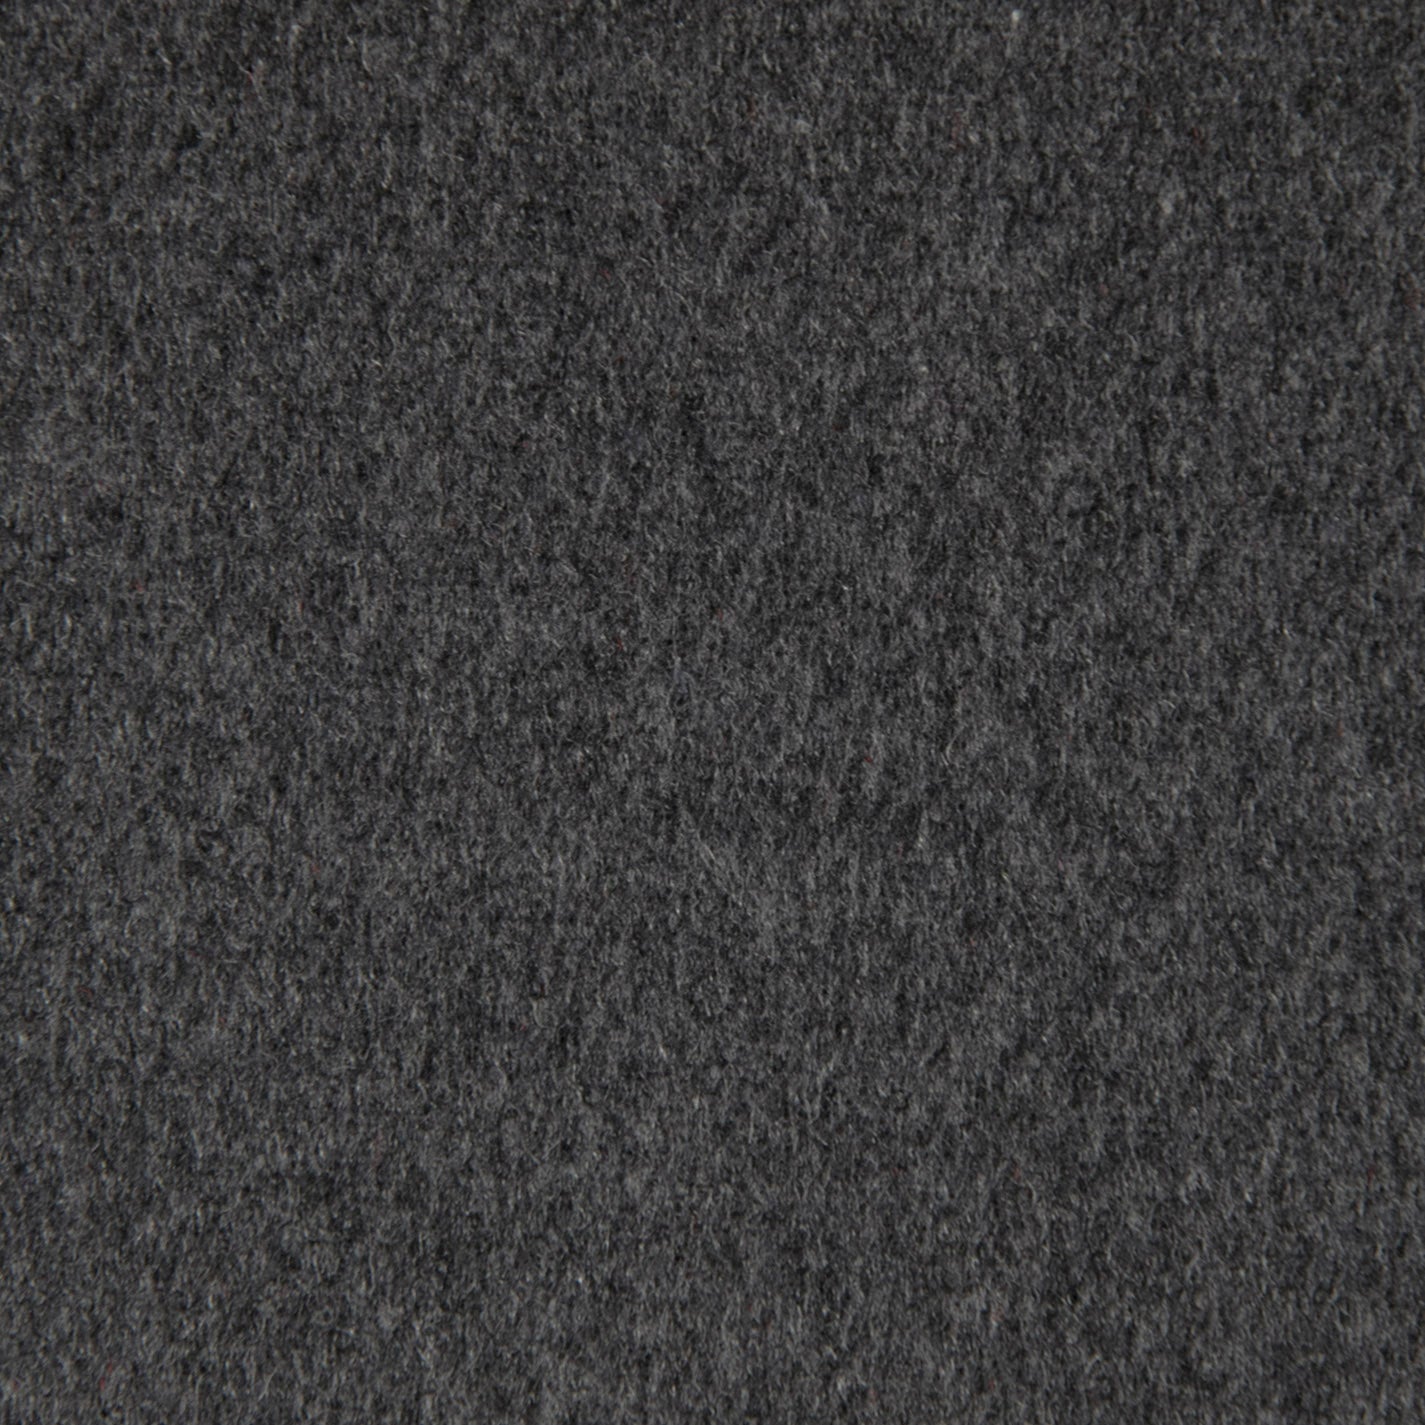 Charcoal Cashmere Blend Fabric 316 - Fabrics4Fashion